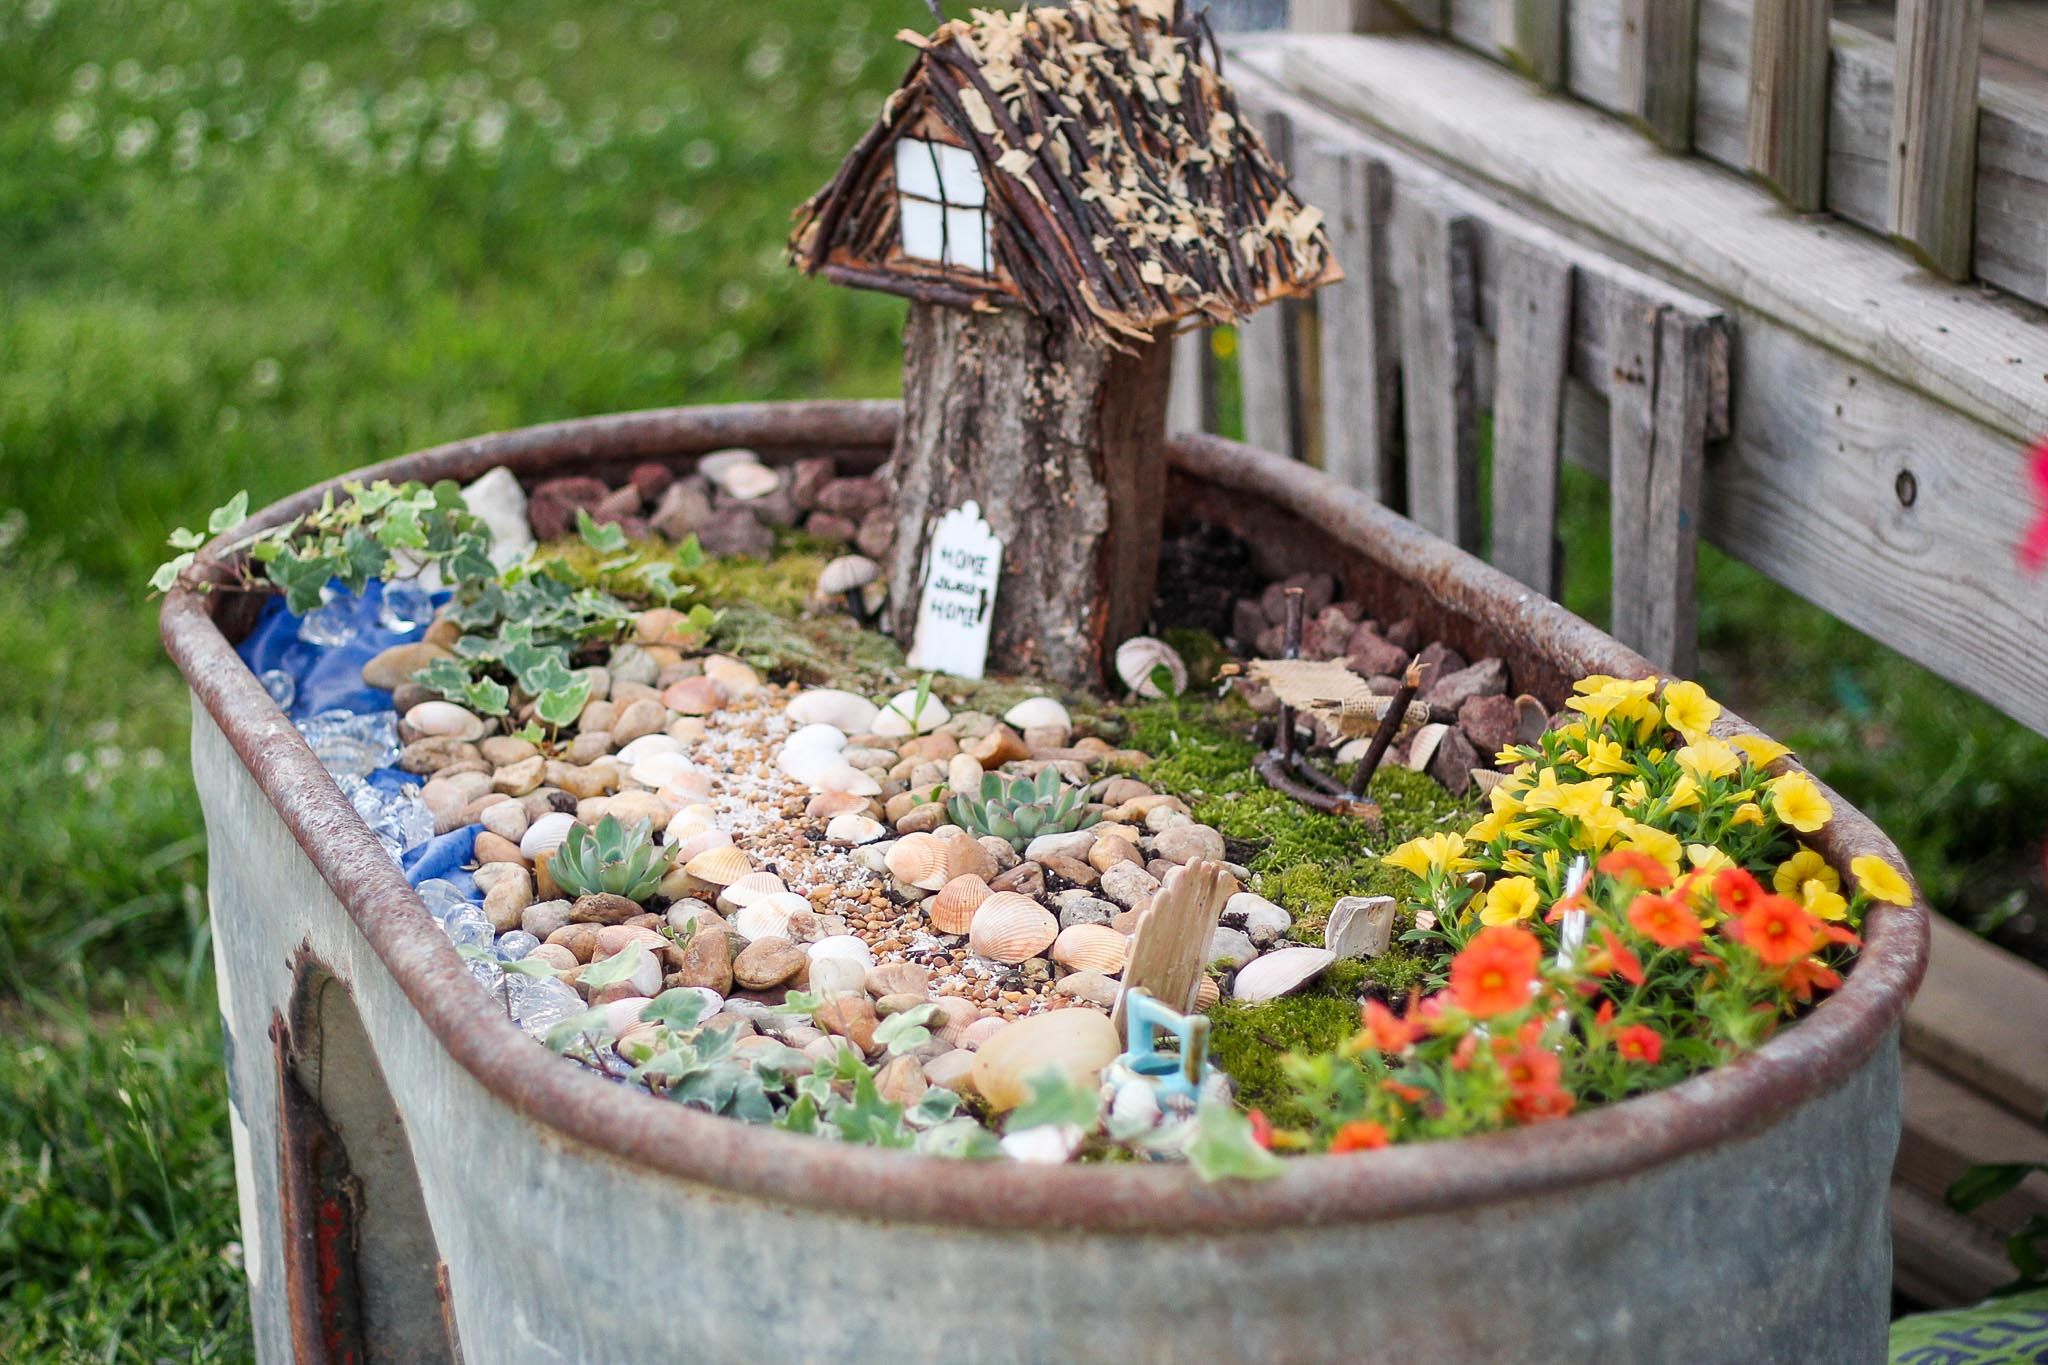 Miniature Fairy Garden Accessories Ideas Kits Supplies Ornaments Indoor Outdoor